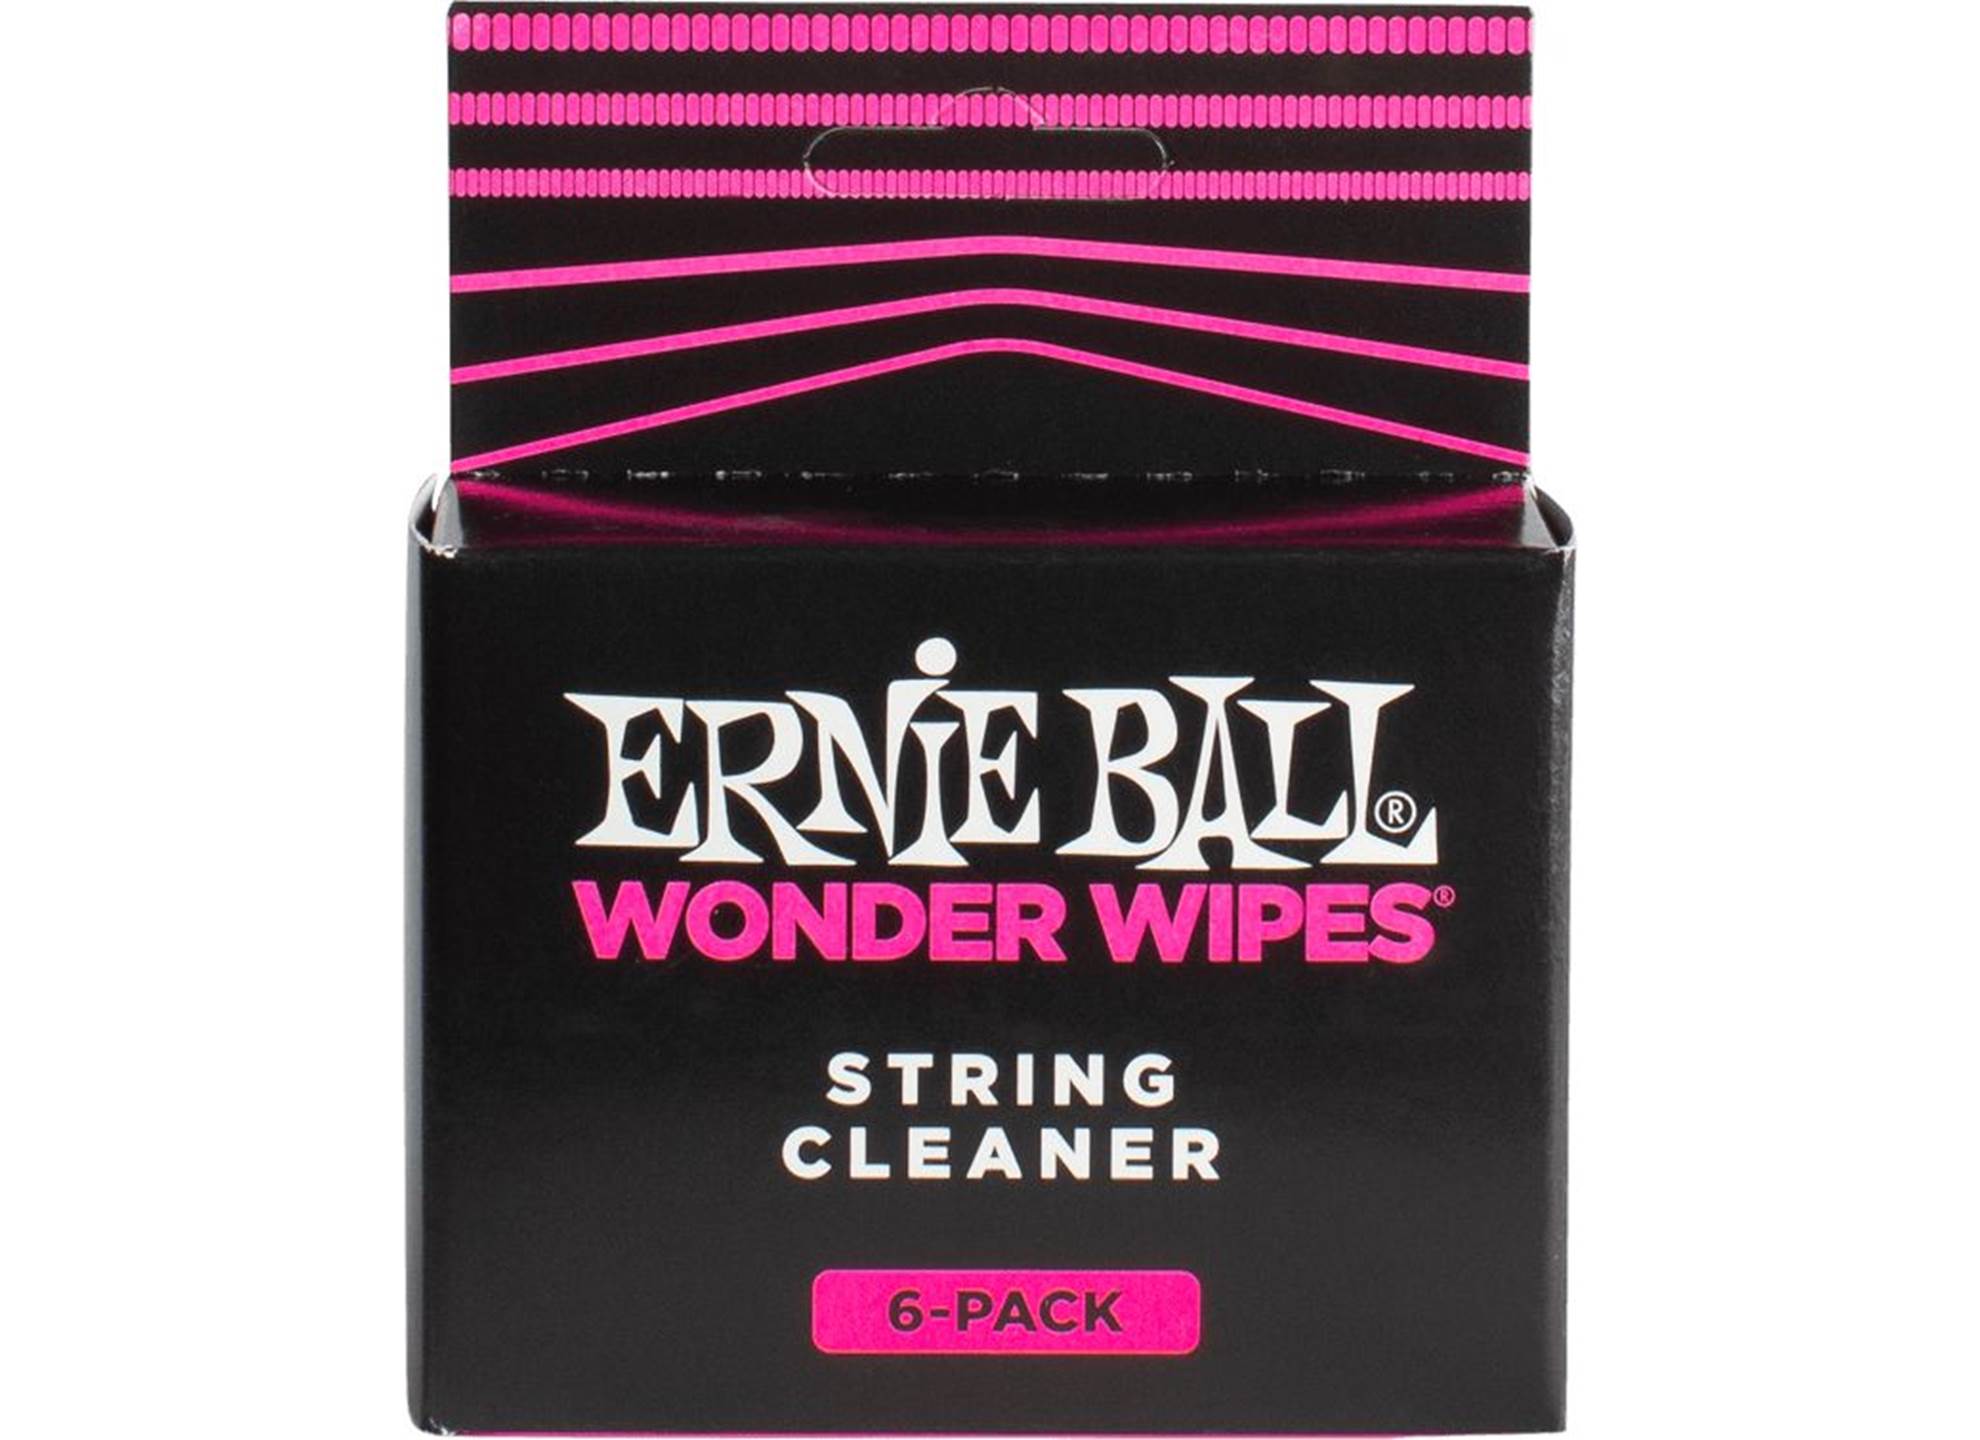 EB-4277 Wonder Wipes String Cleaner 6-pack